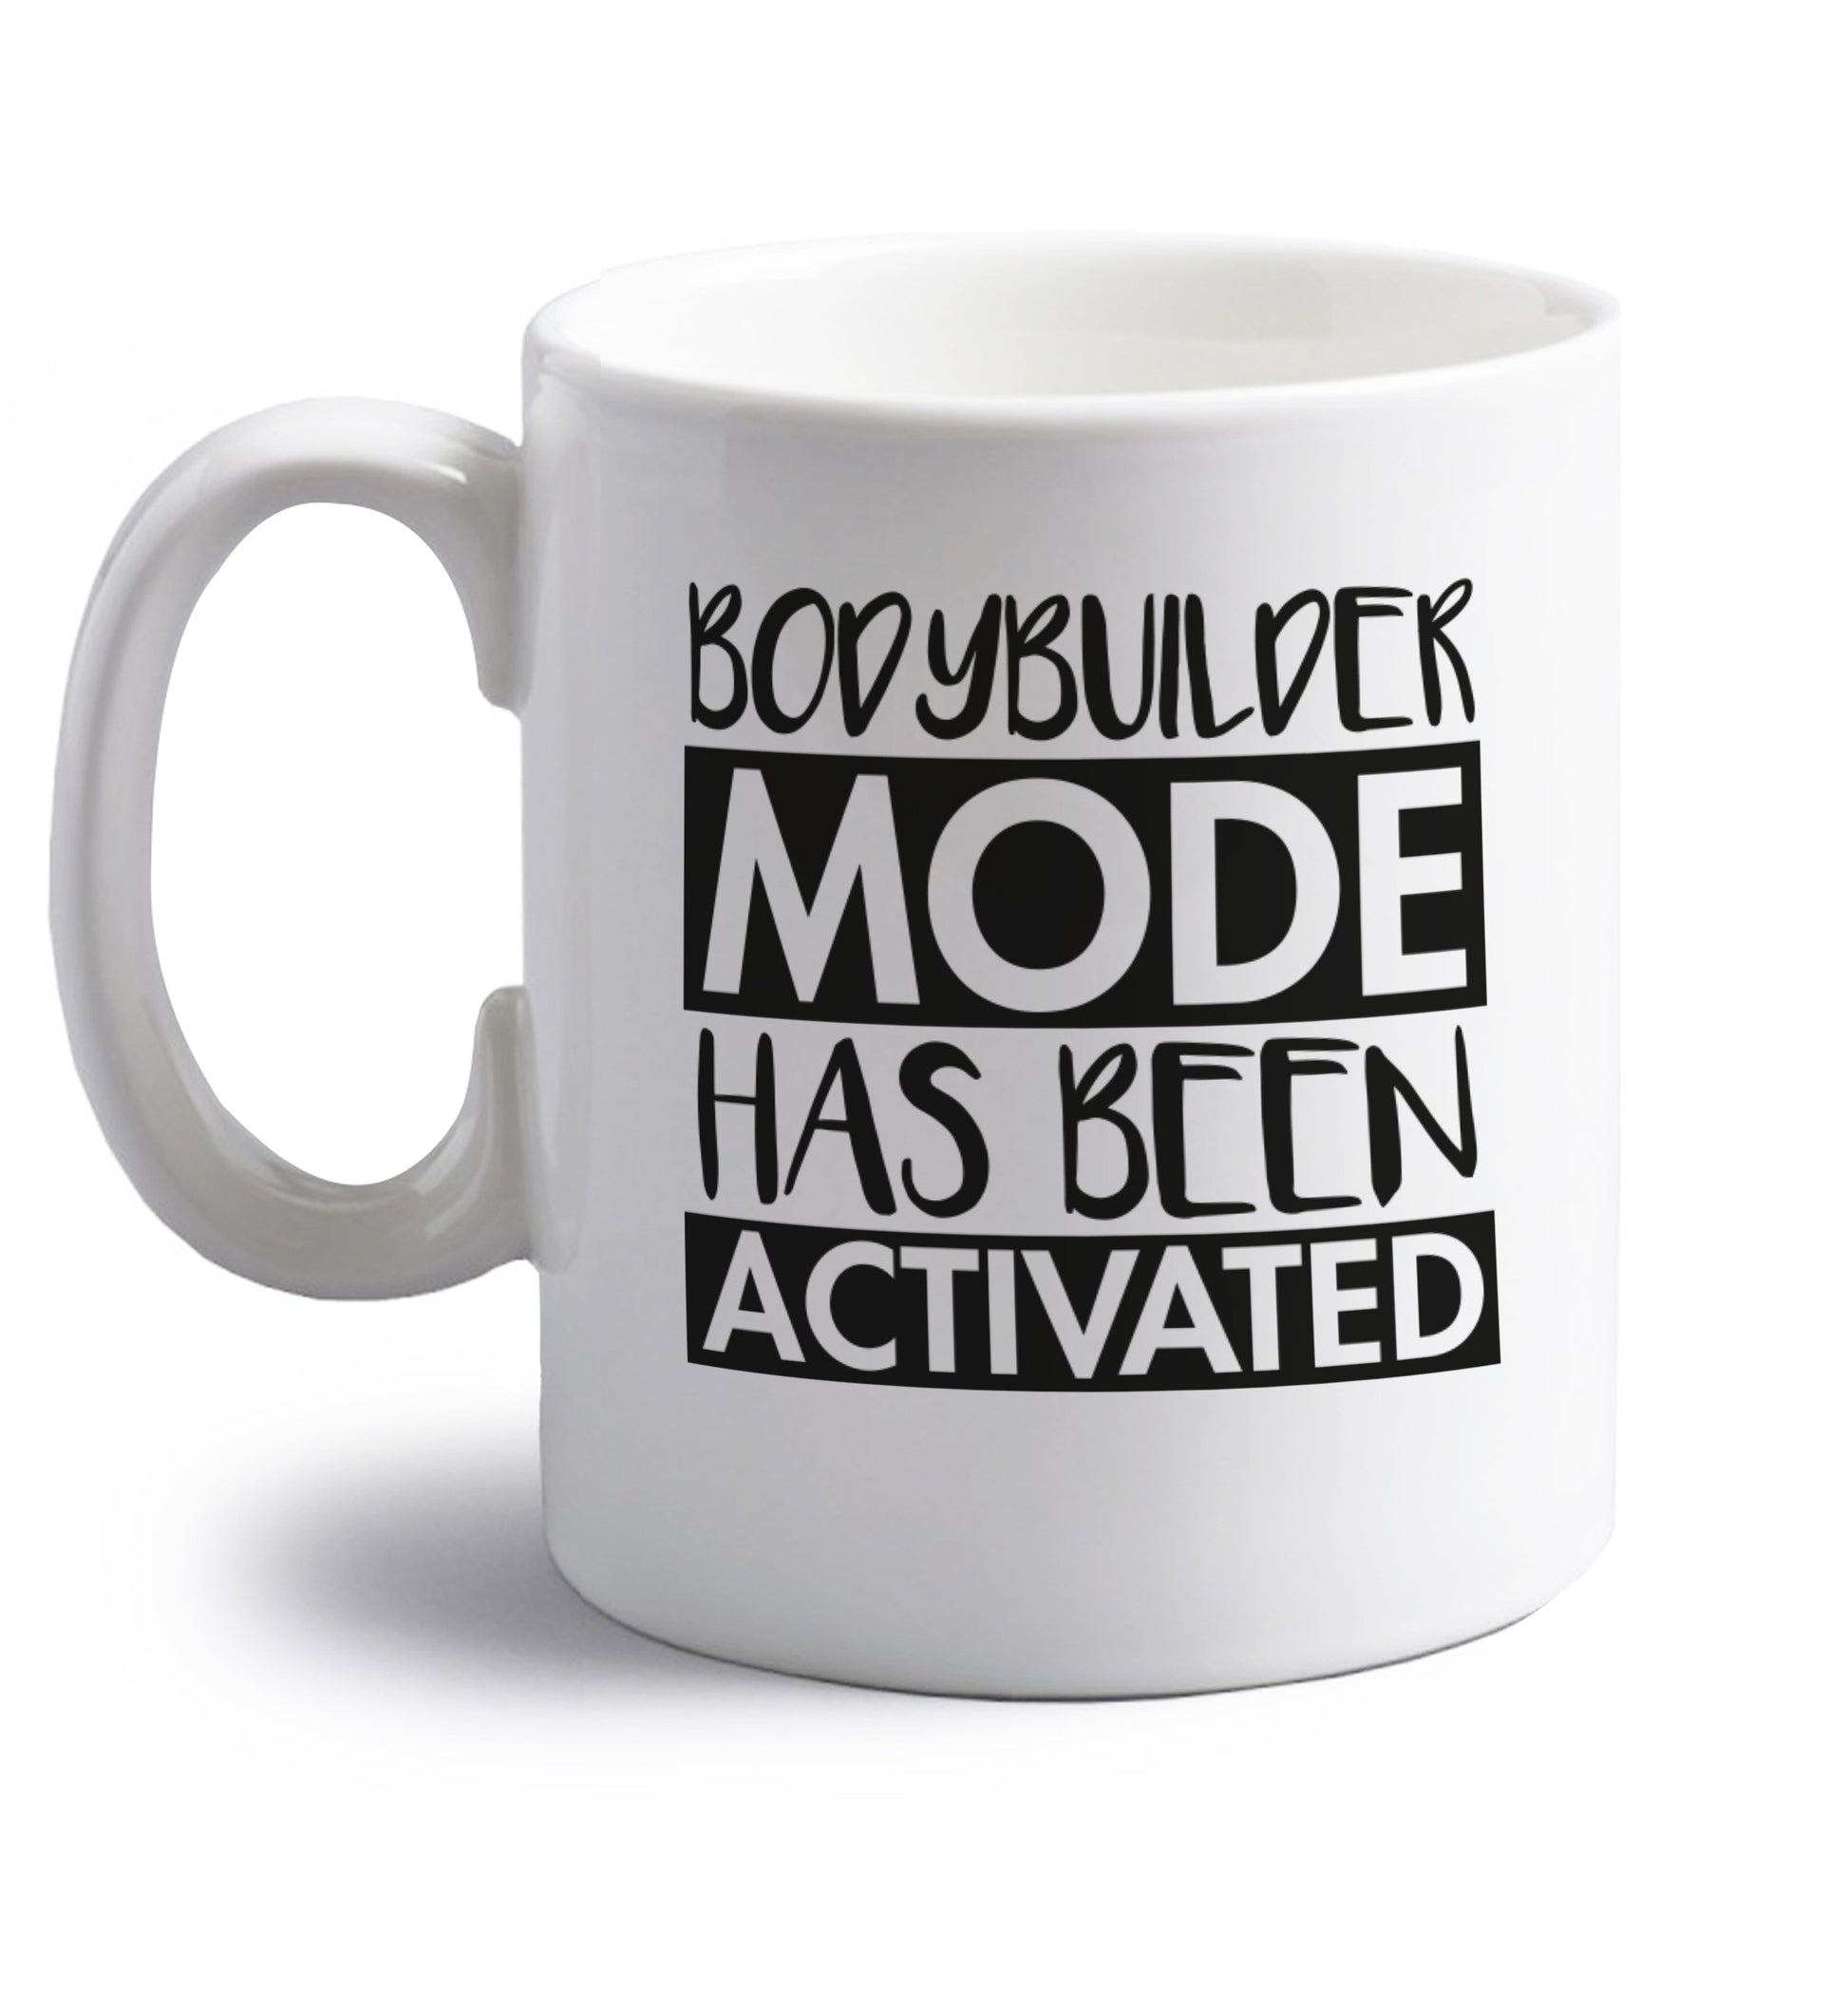 Bodybuilder mode activated right handed white ceramic mug 